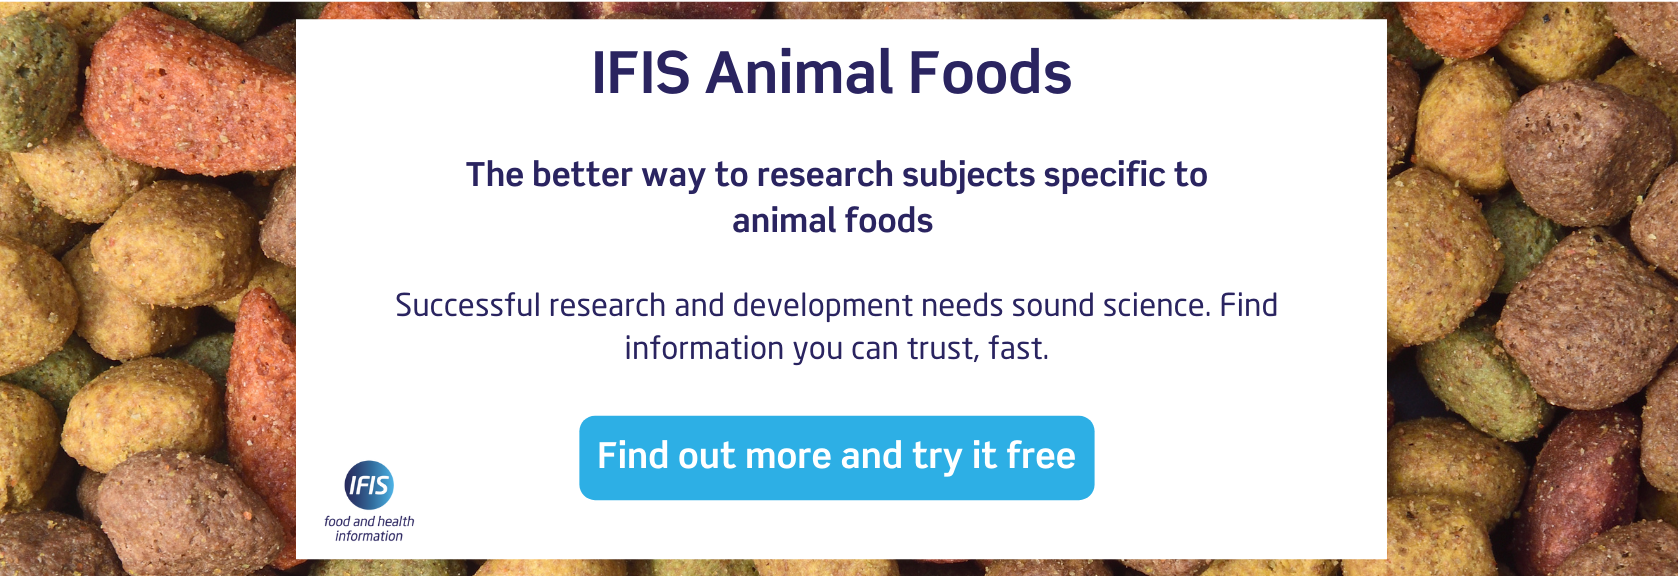 IFIS Animal Foods